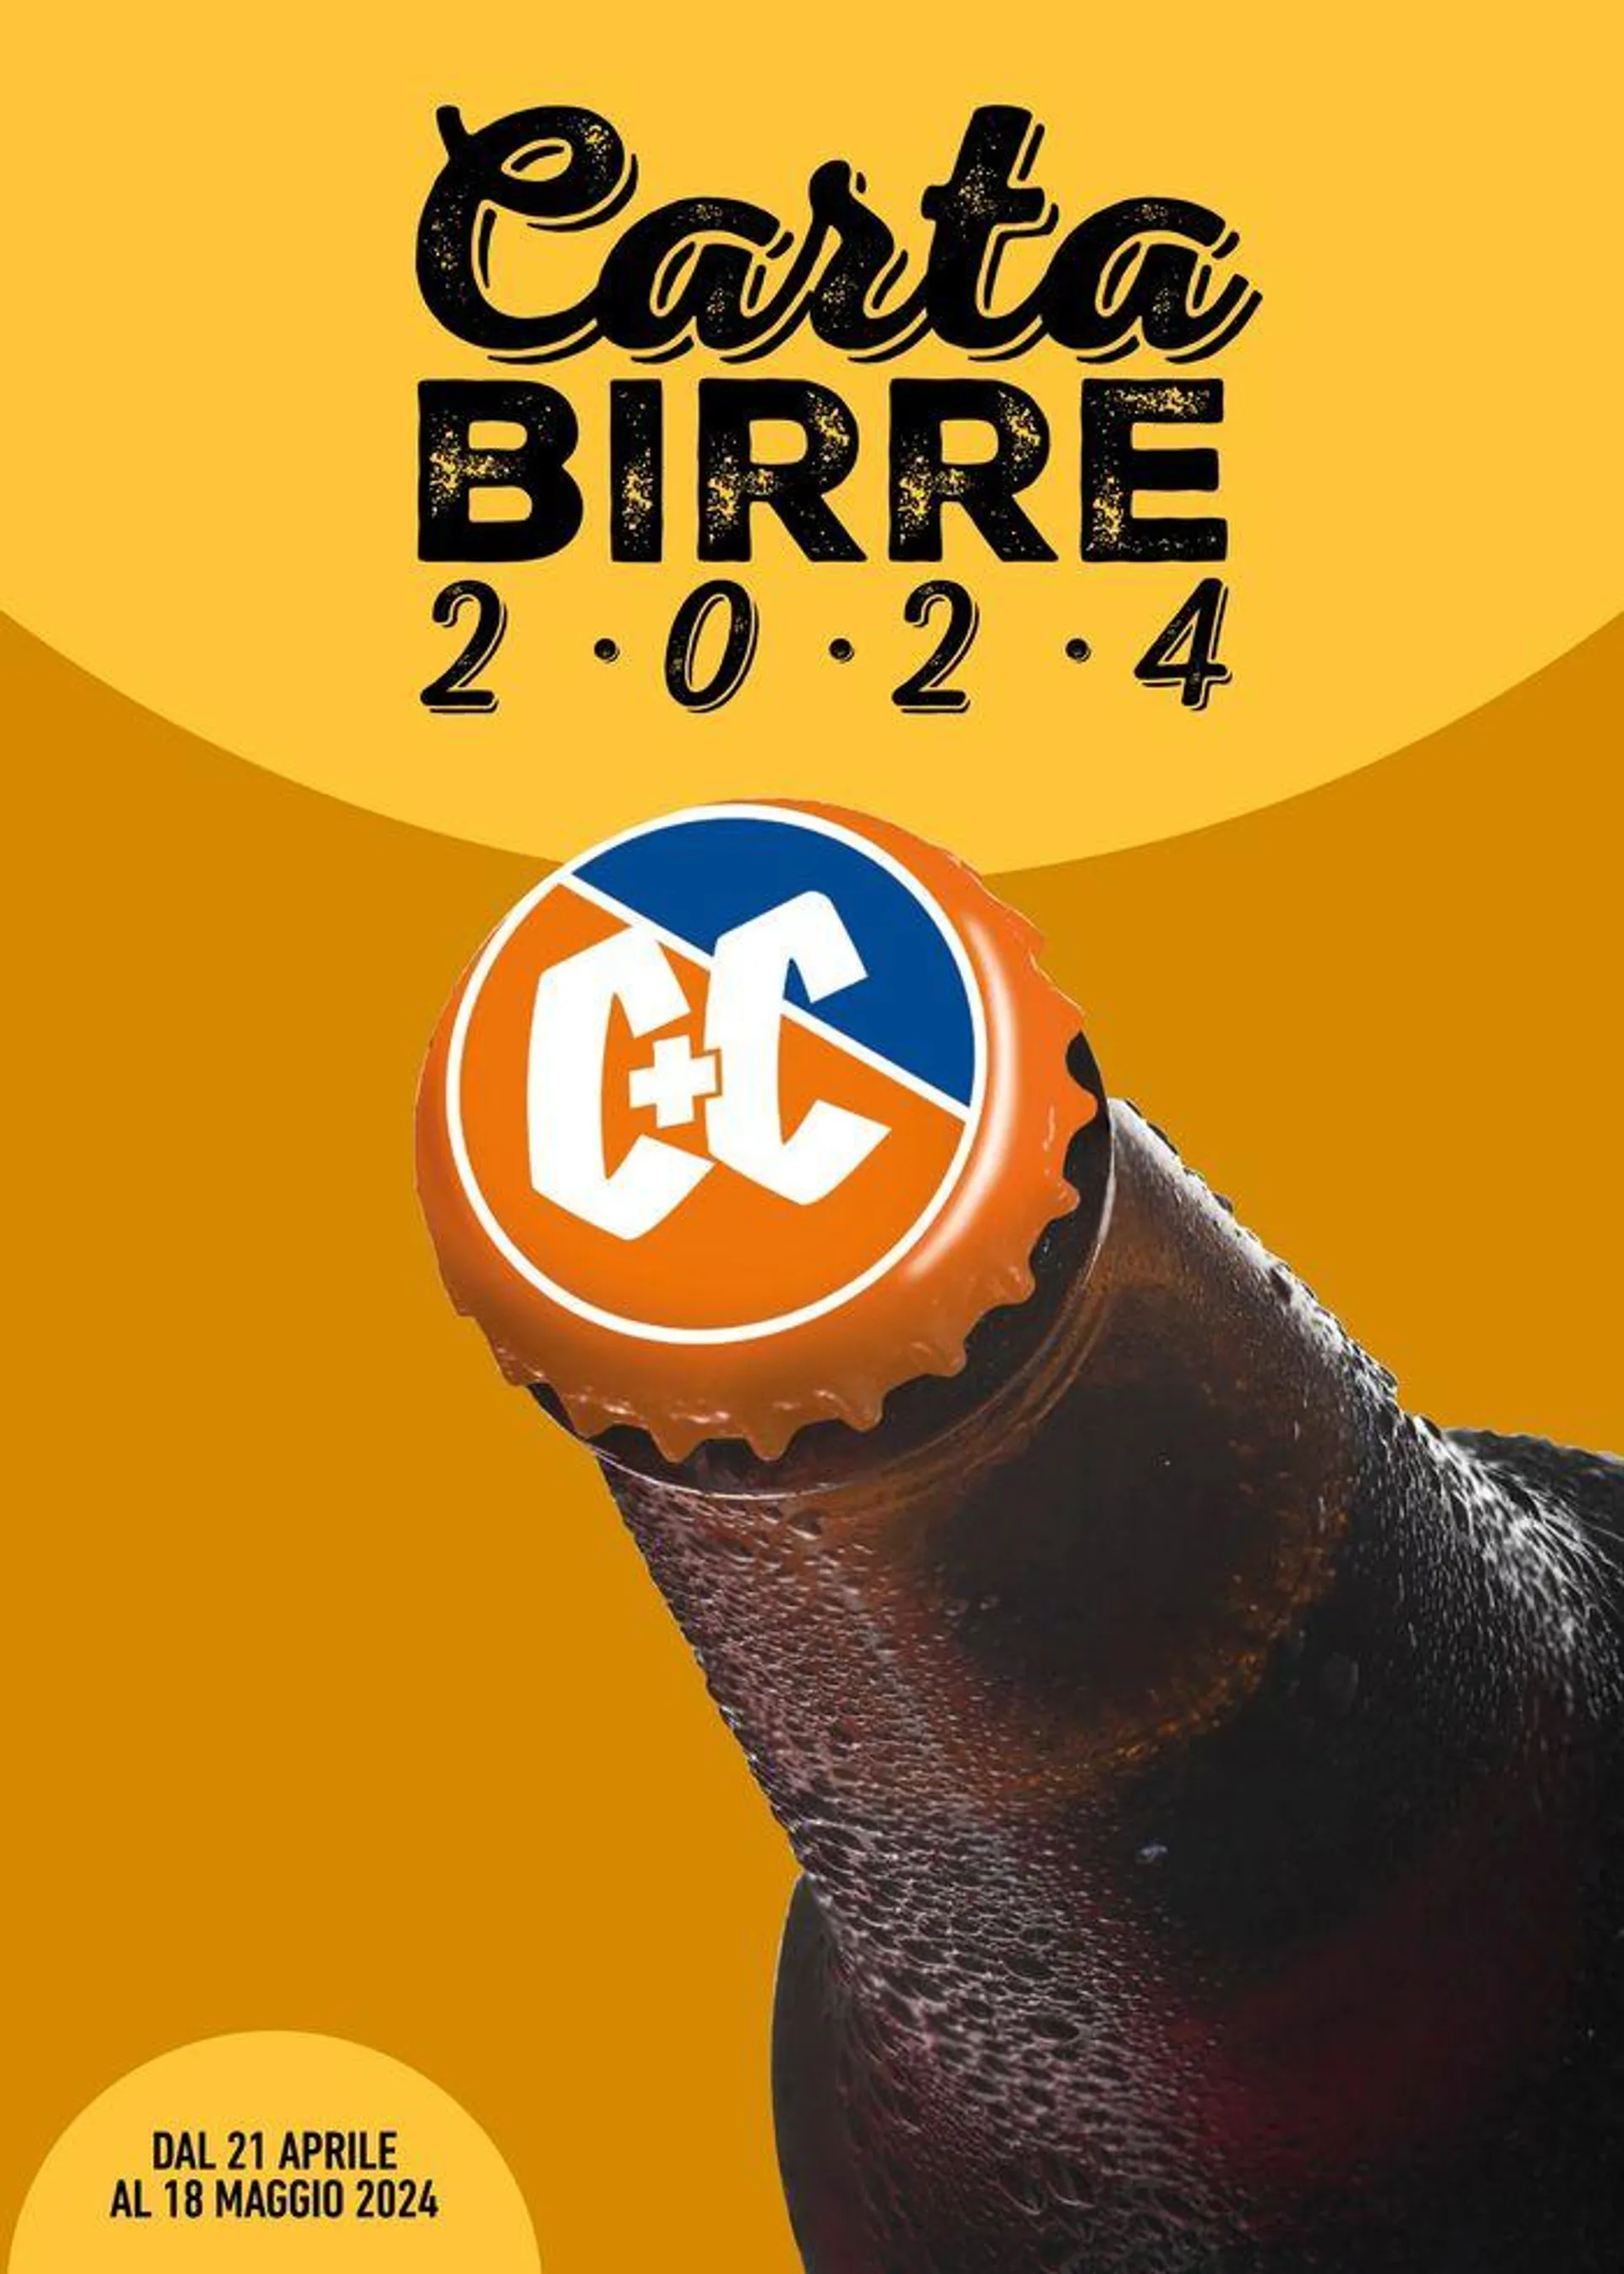 Catalogo birre 2024 - 1